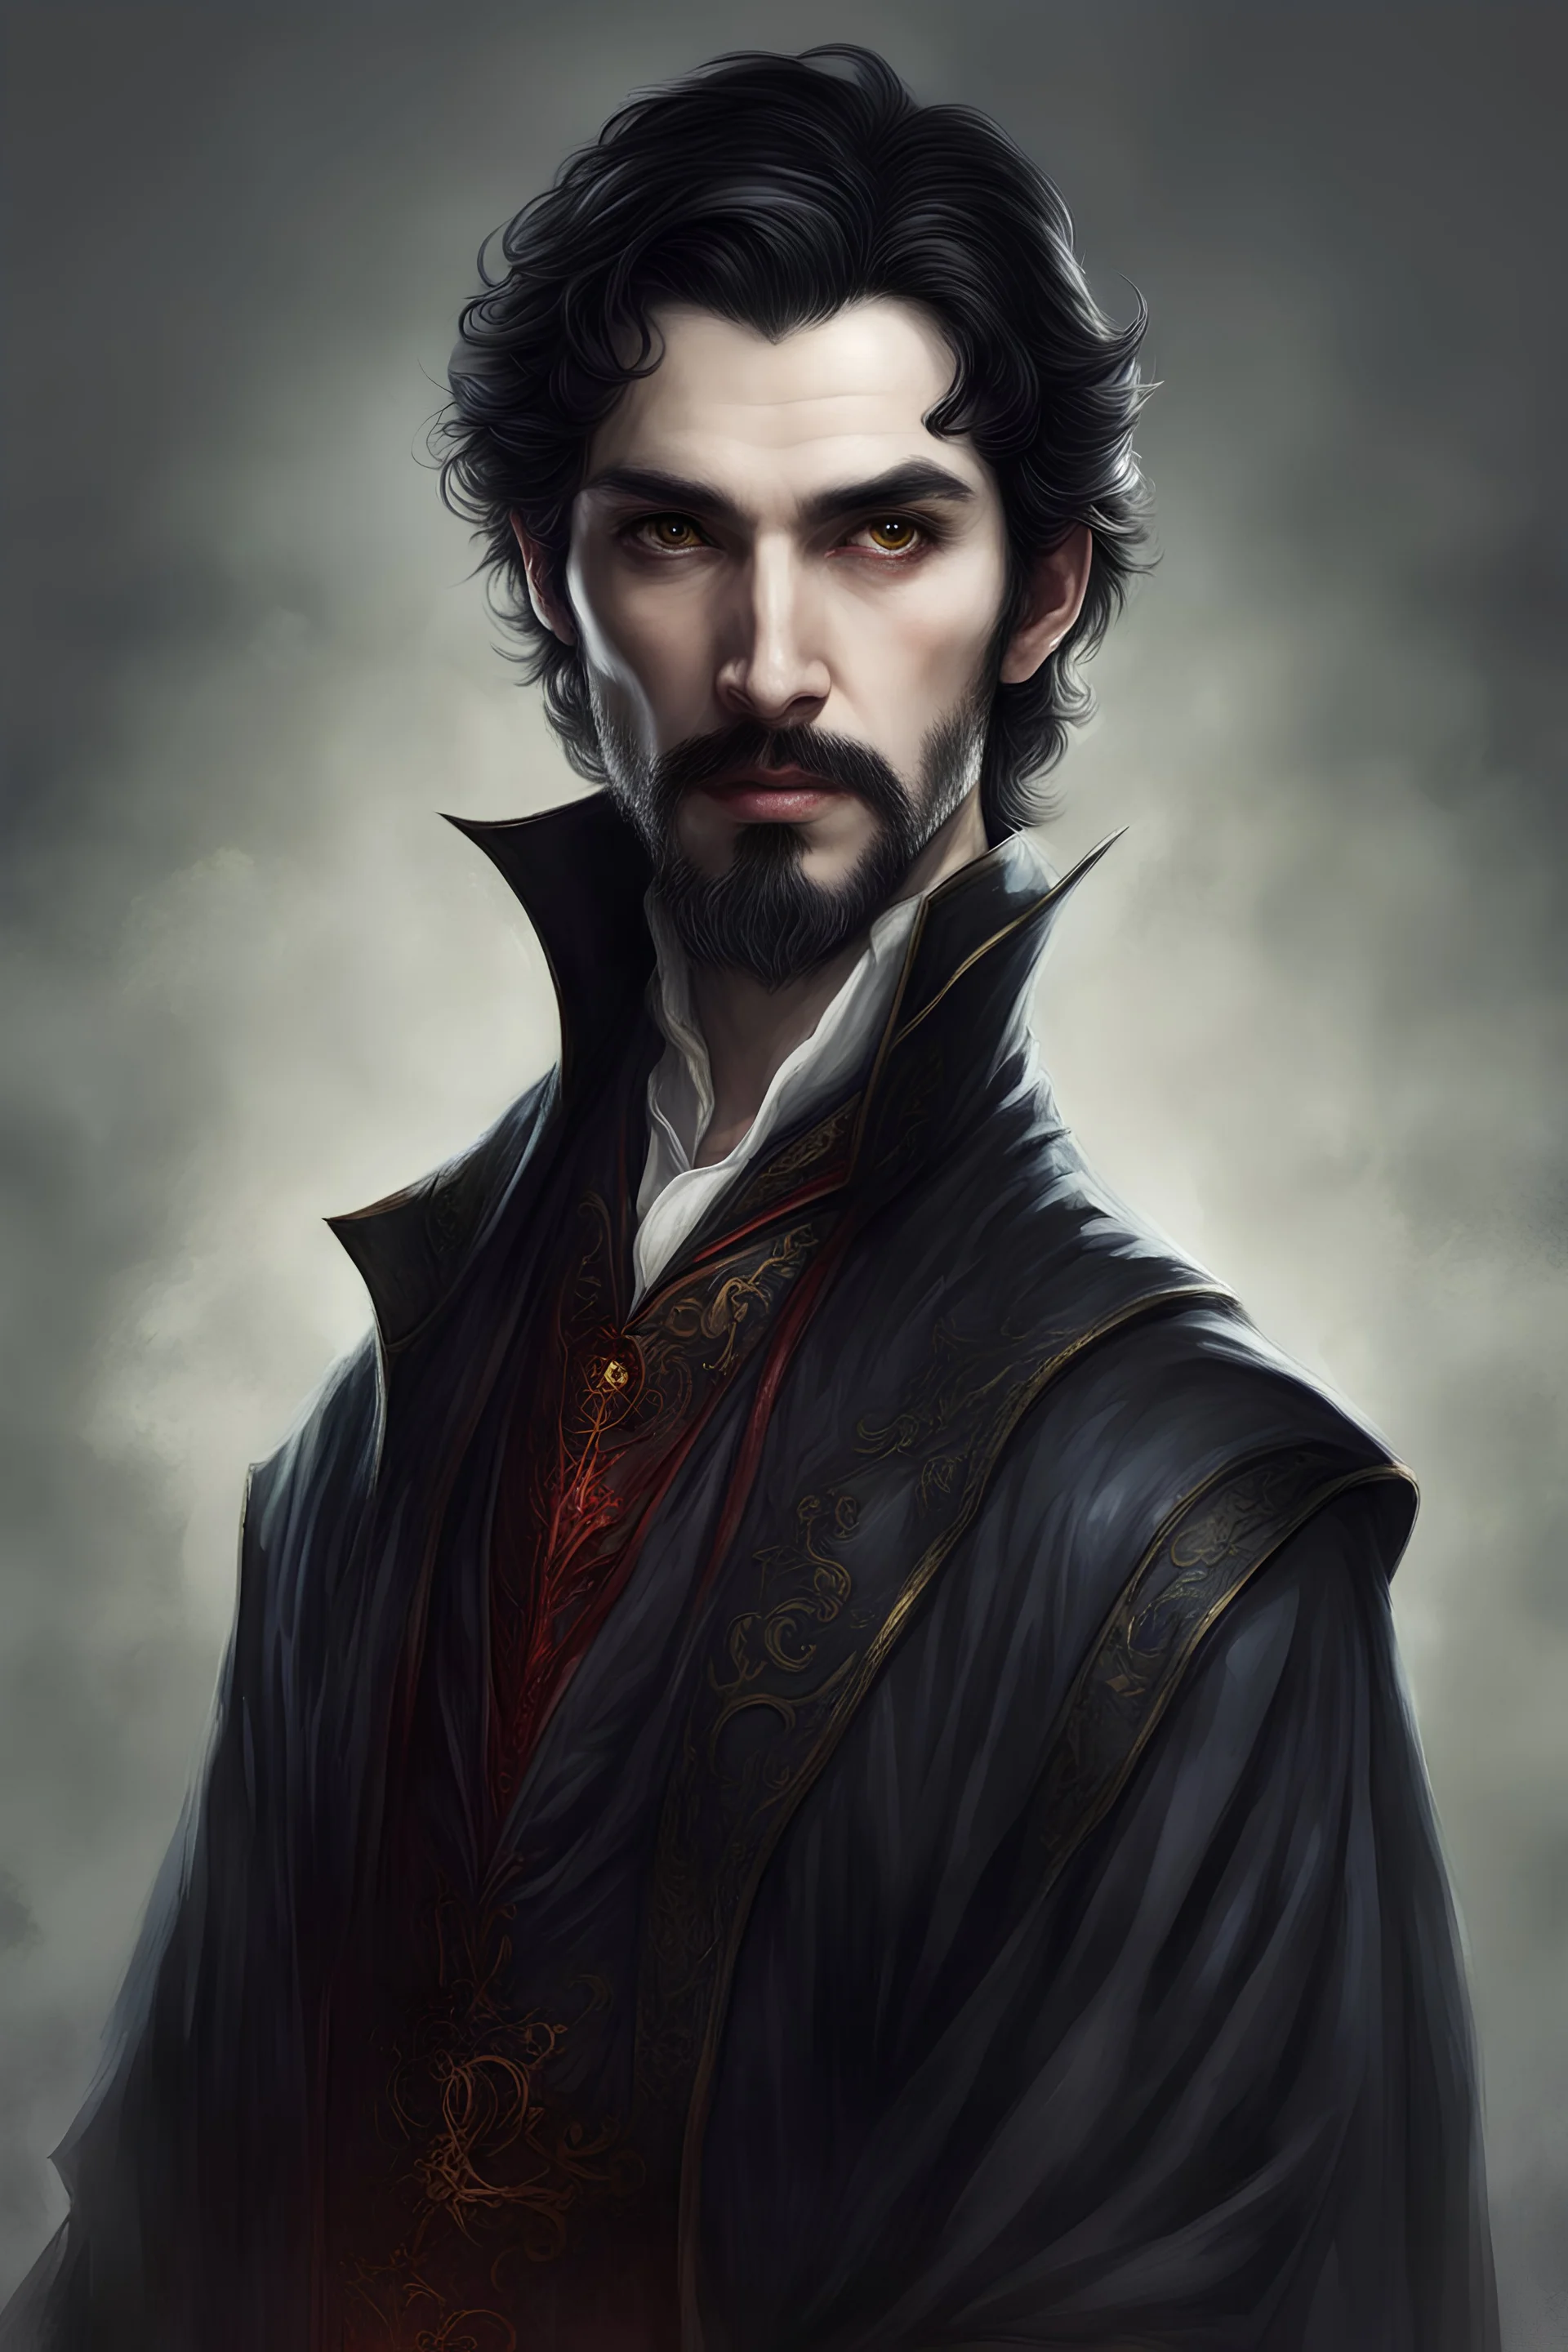 Male Wizard Professor, Black hair, short beard, vampire